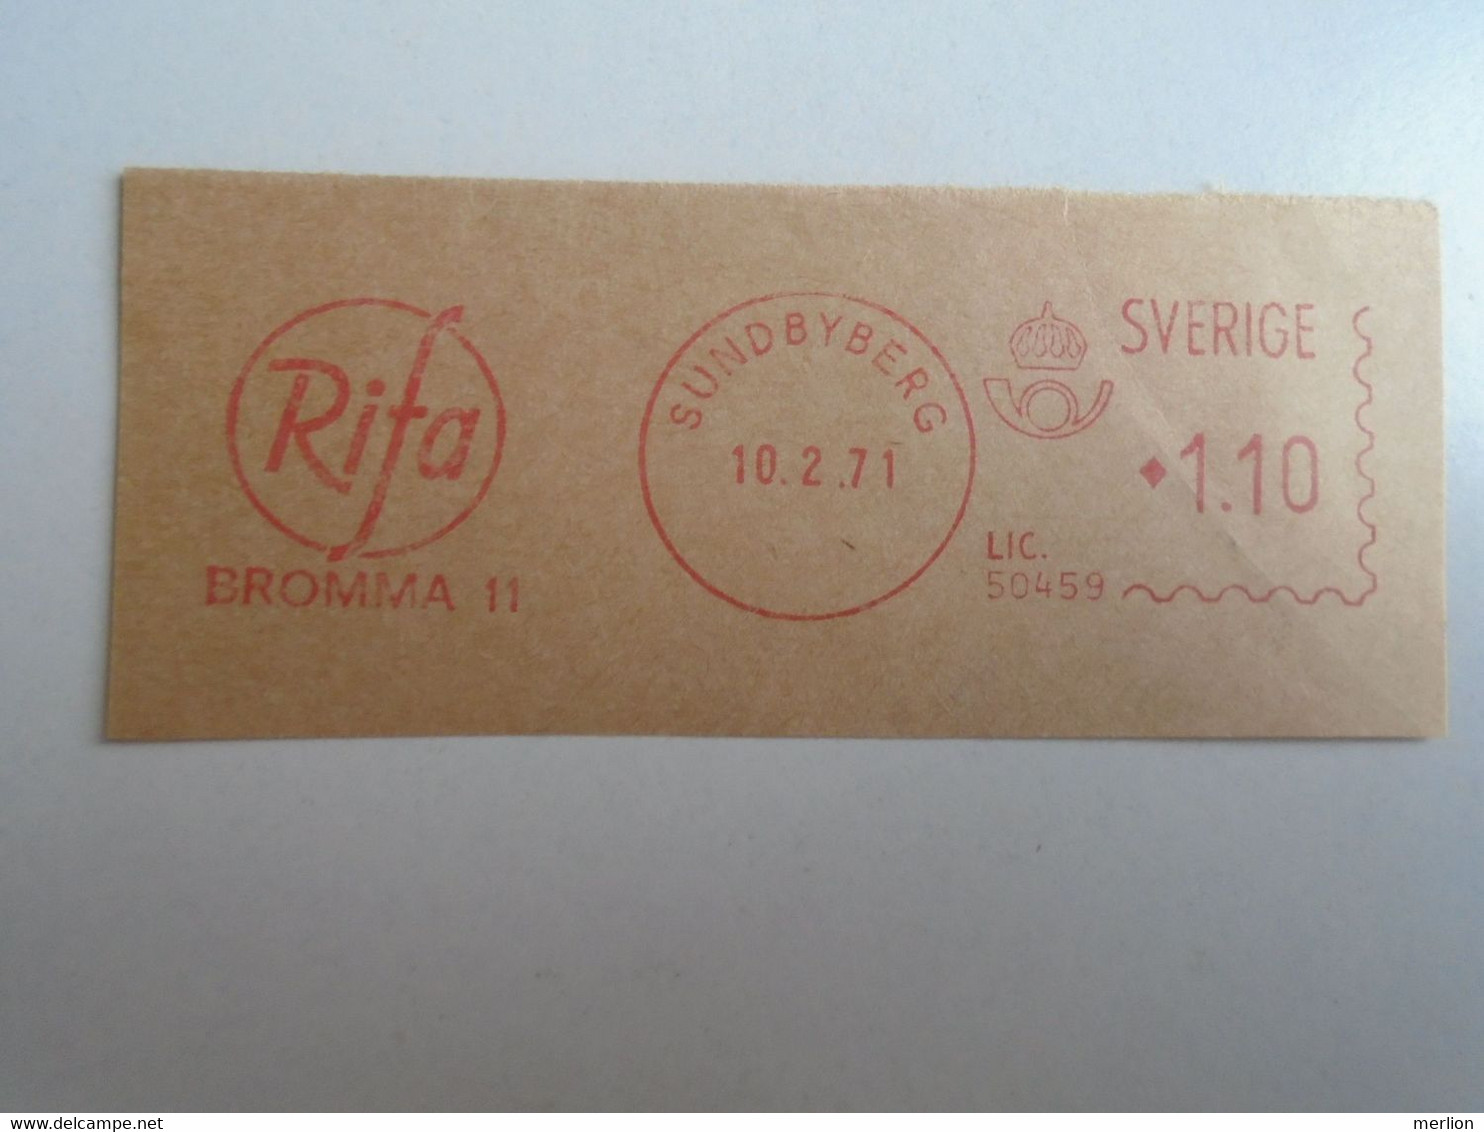 D191861  Sweden Sverige   RIFA  -Sundbyberg    1971  - 1.10 K - RED METER  FREISTEMPEL  EMA - Timbres De Distributeurs [ATM]